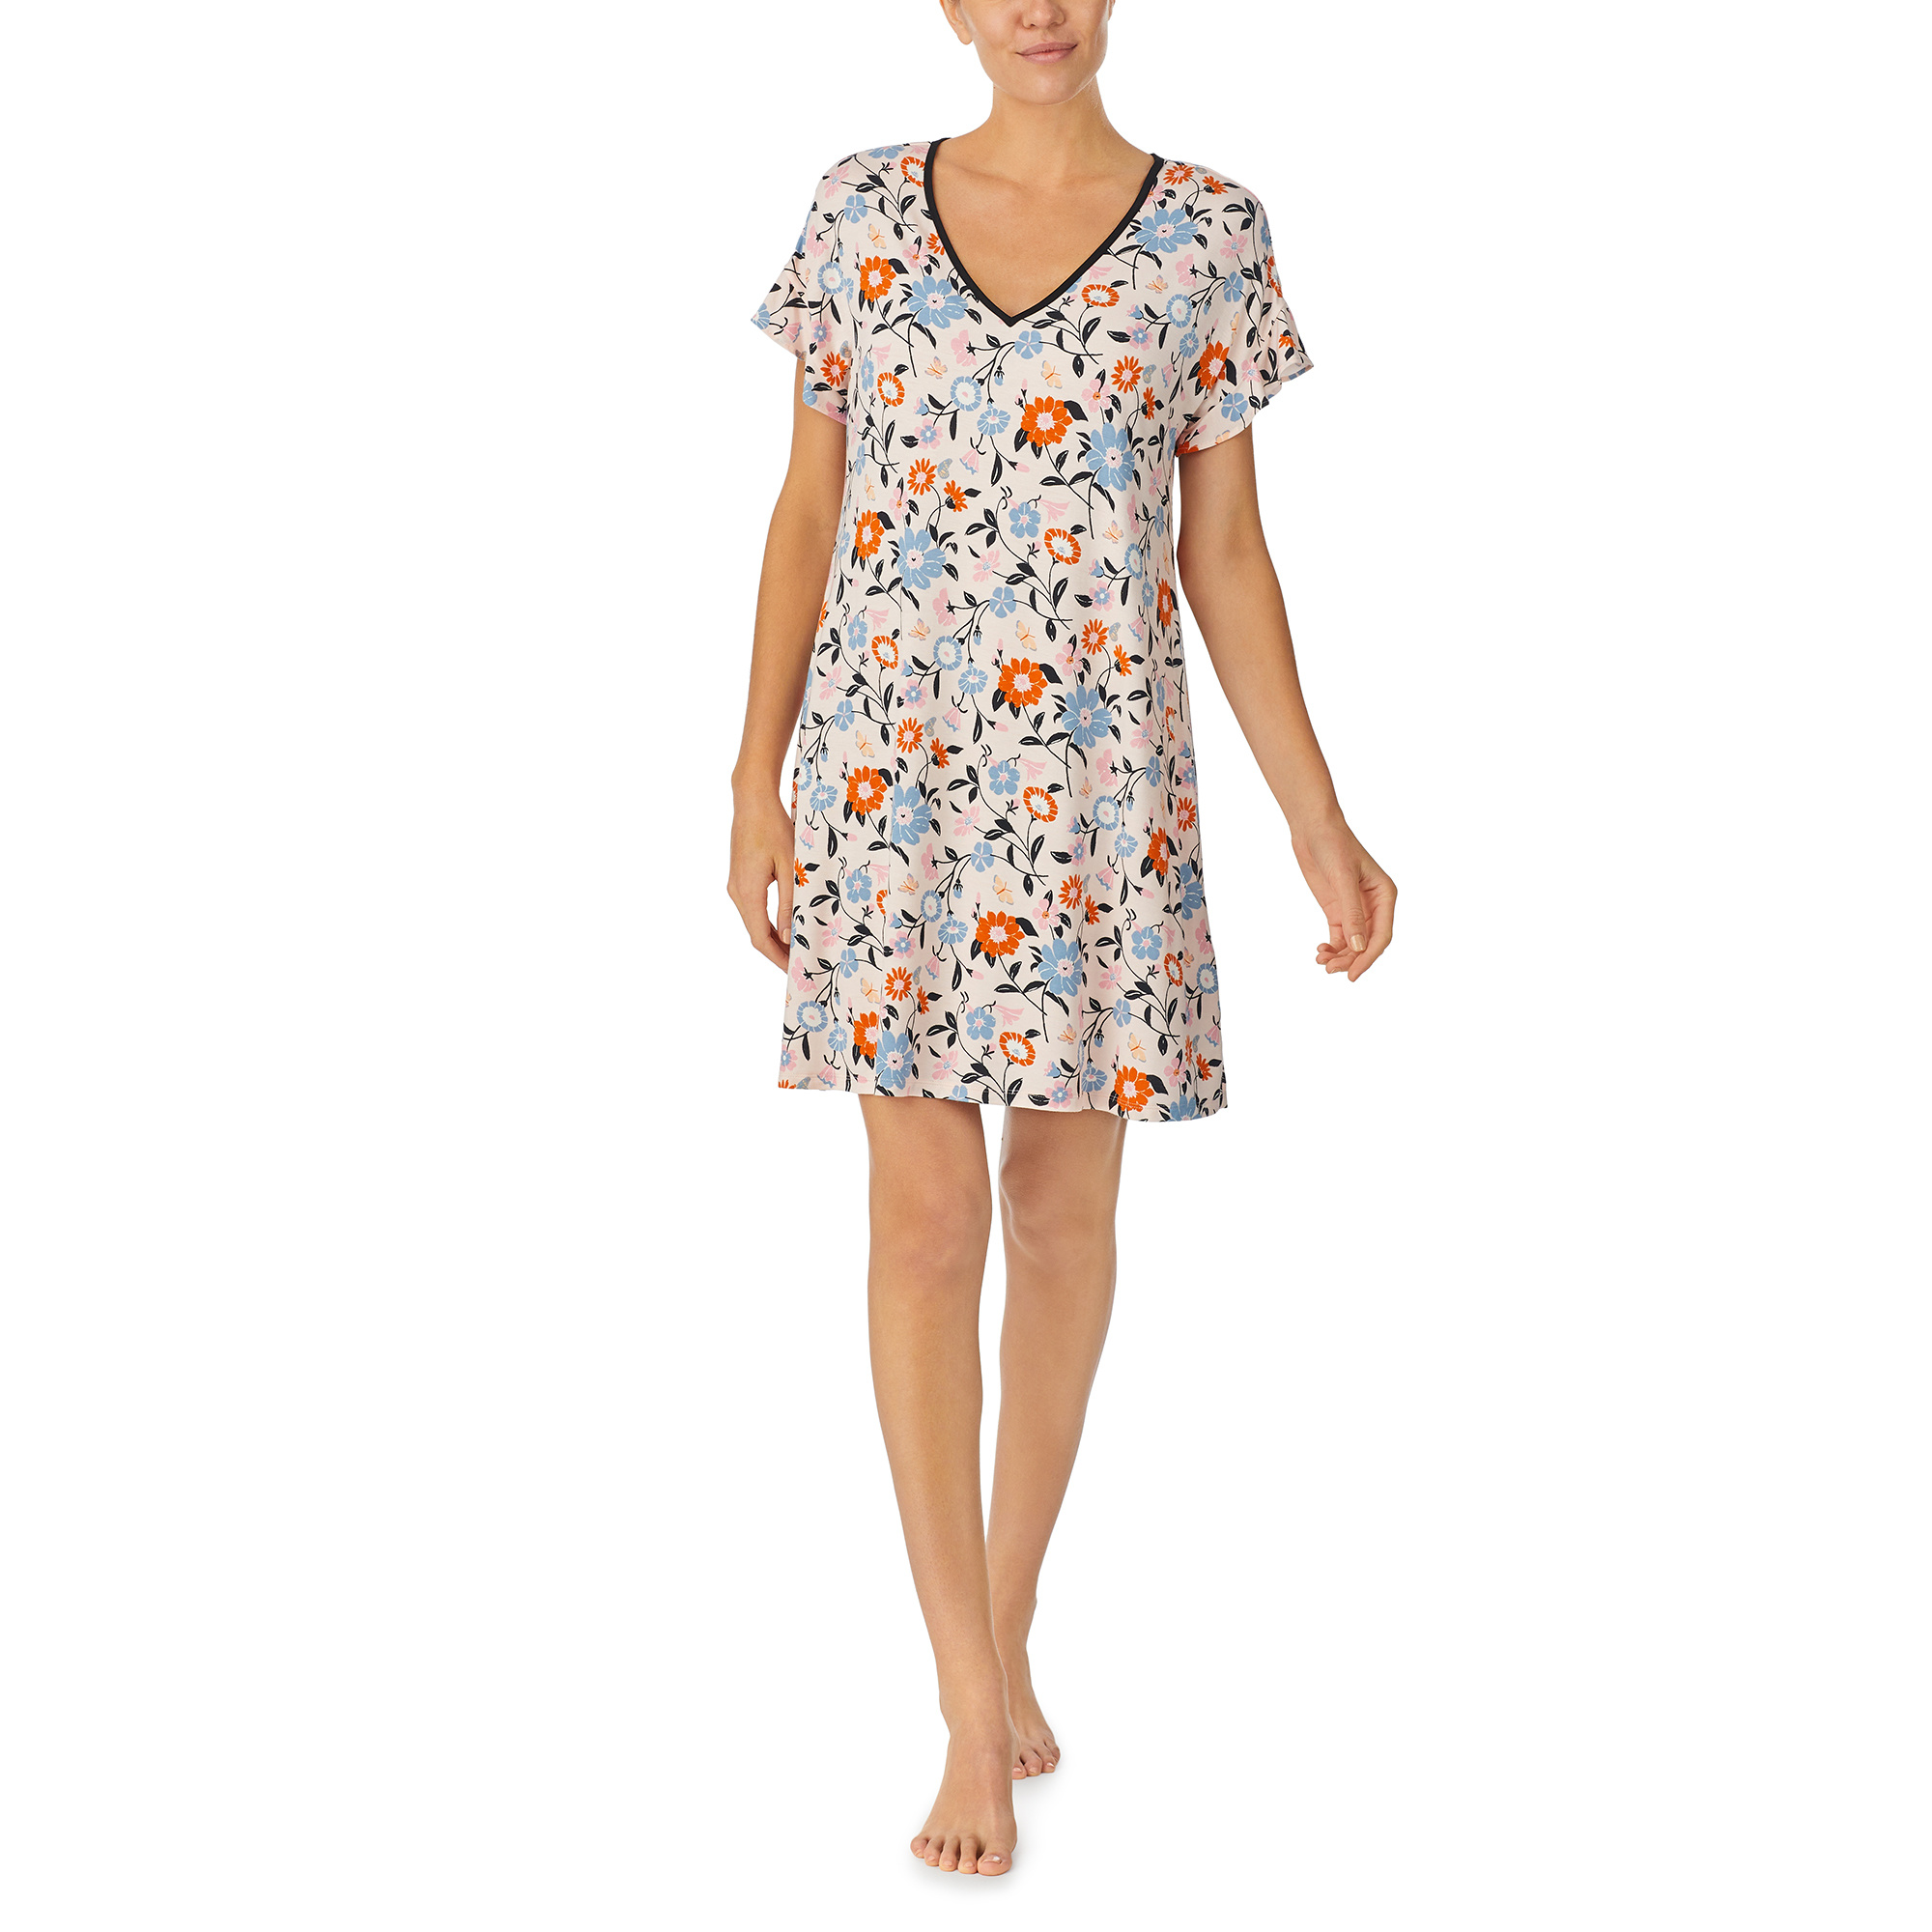 Kate Spade Modal Jersey Sleepshirt - Floral Garden